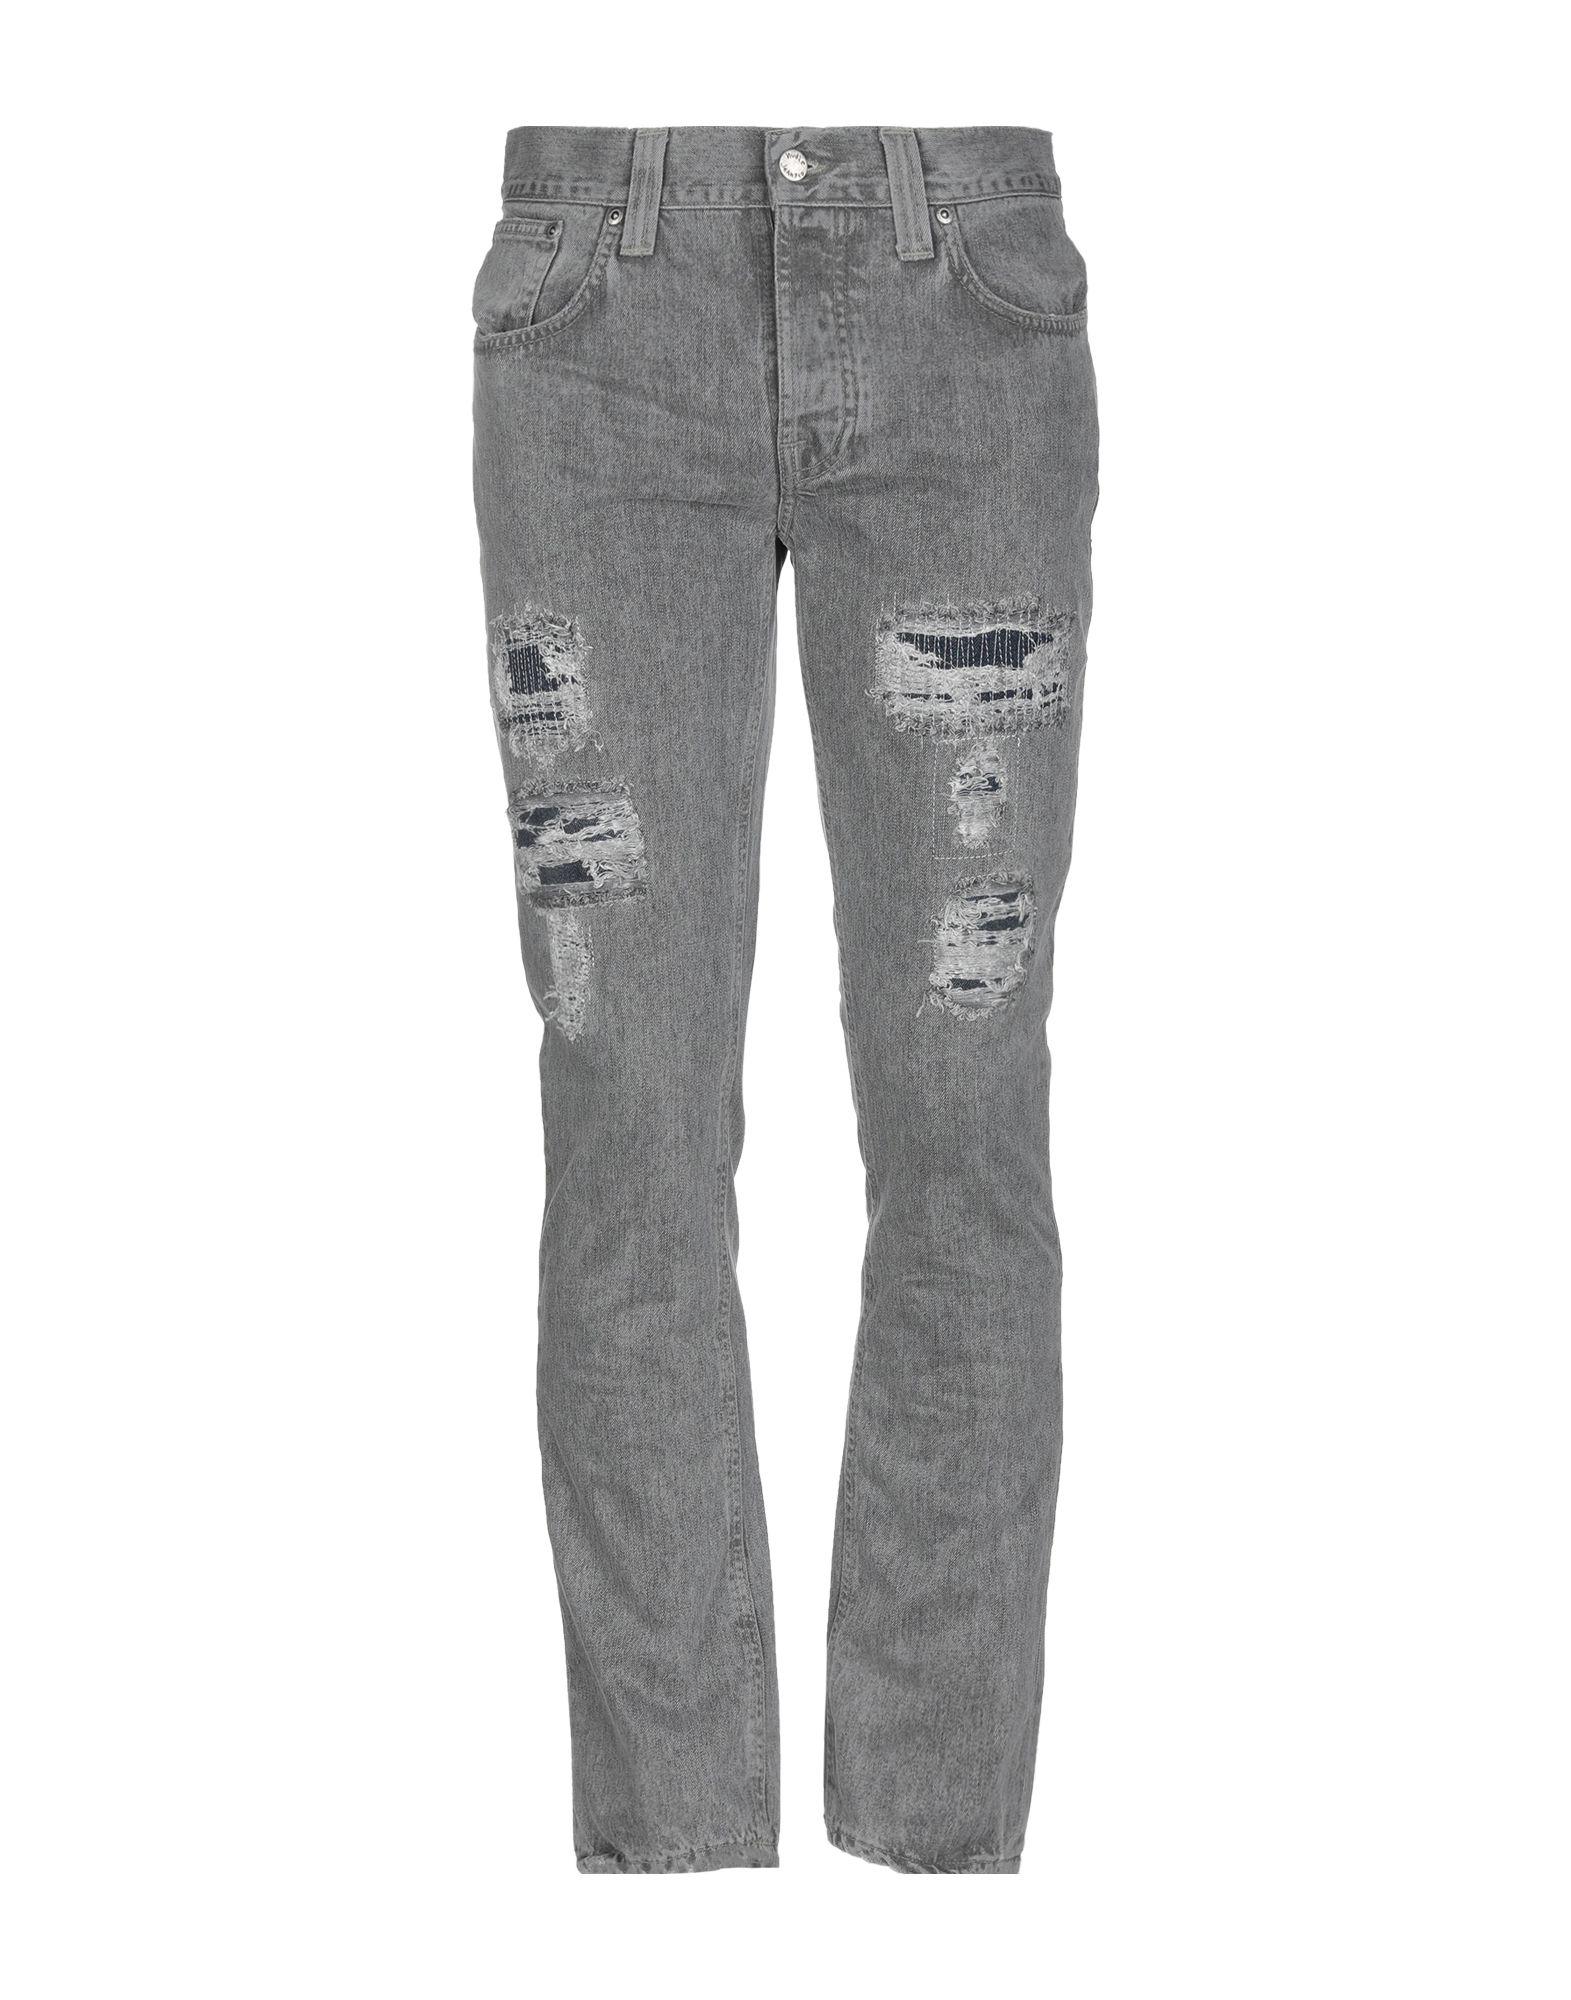 Nudie Jeans Denim Trousers in Grey (Gray) for Men - Lyst